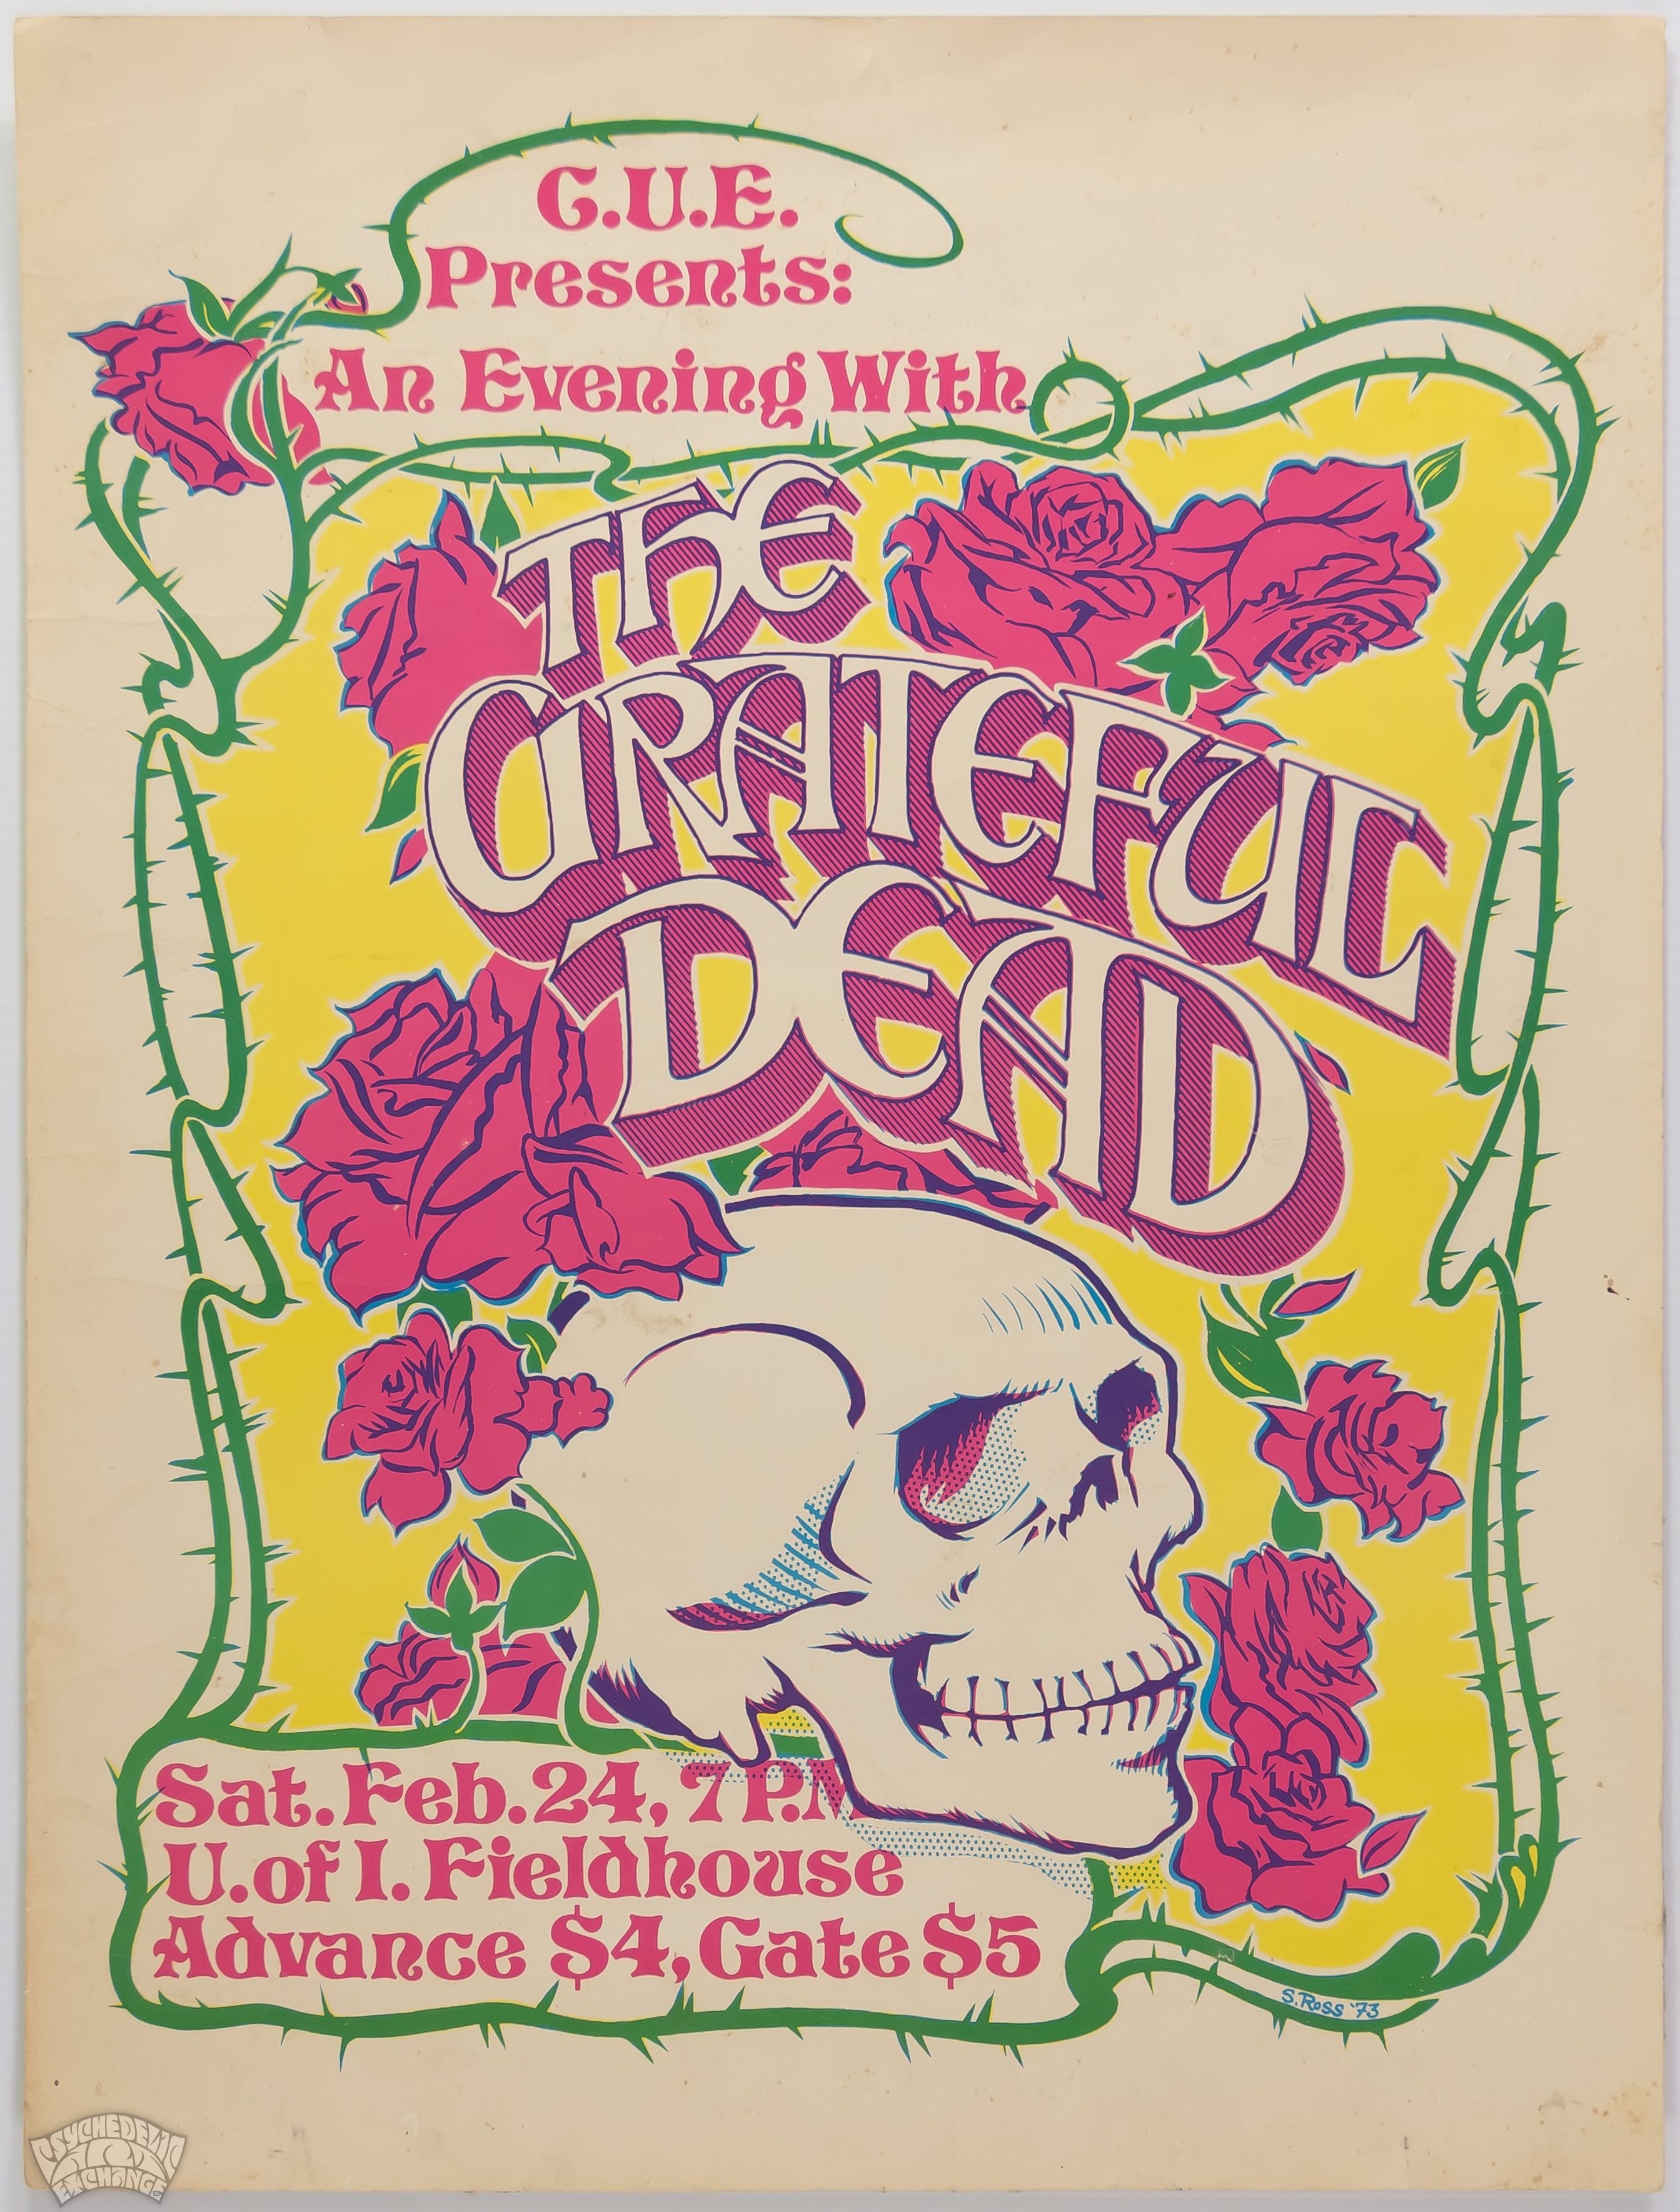 Grateful Dead University of Iowa Fieldhouse 1973 Concert Poster